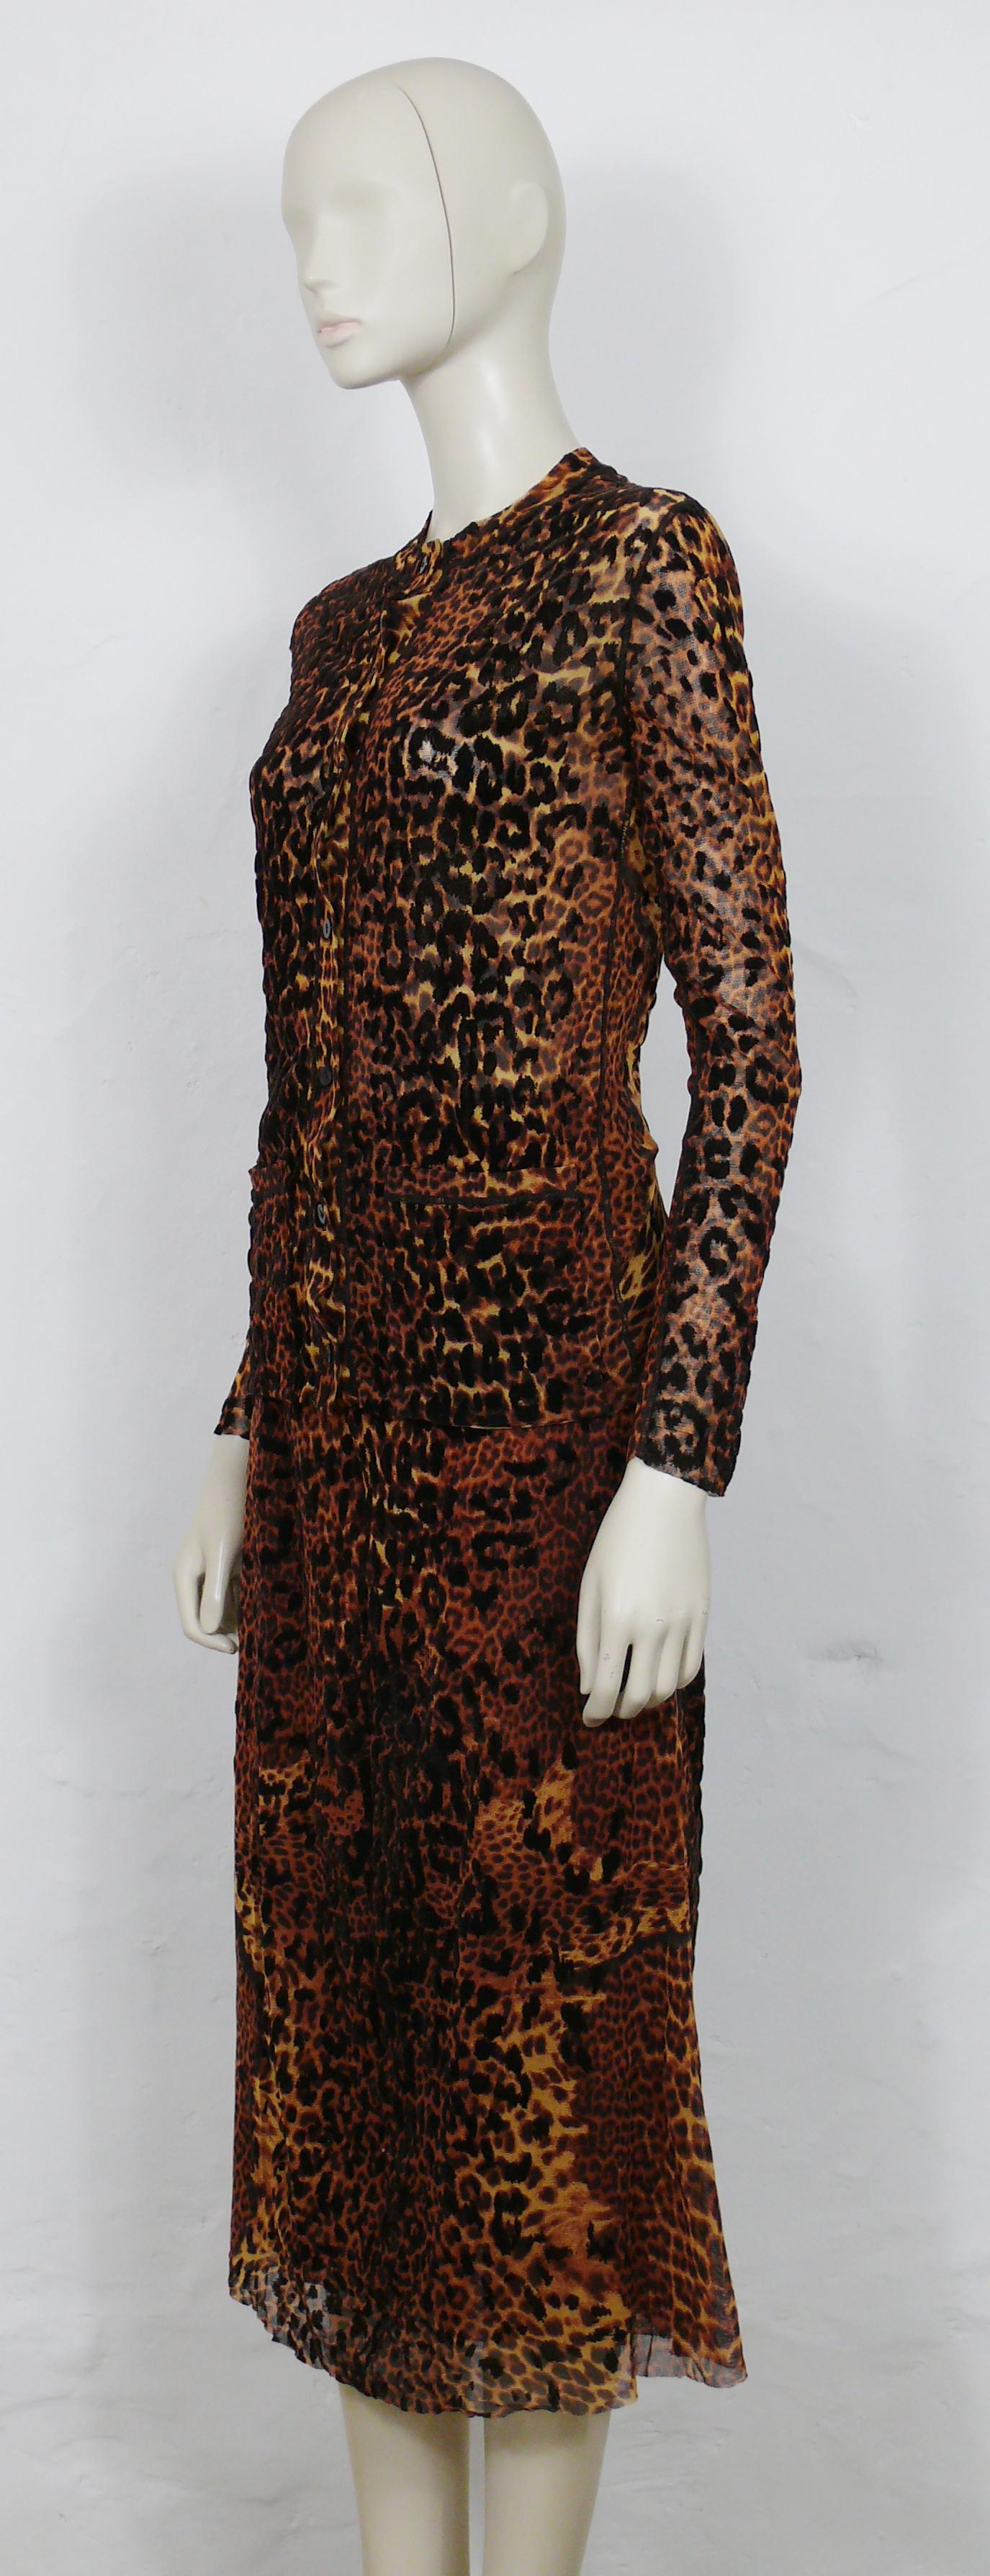 Jean Paul Gaultier Sheer Mesh Cheetah Print Cardigan and Skirt Ensemble Size M For Sale 2